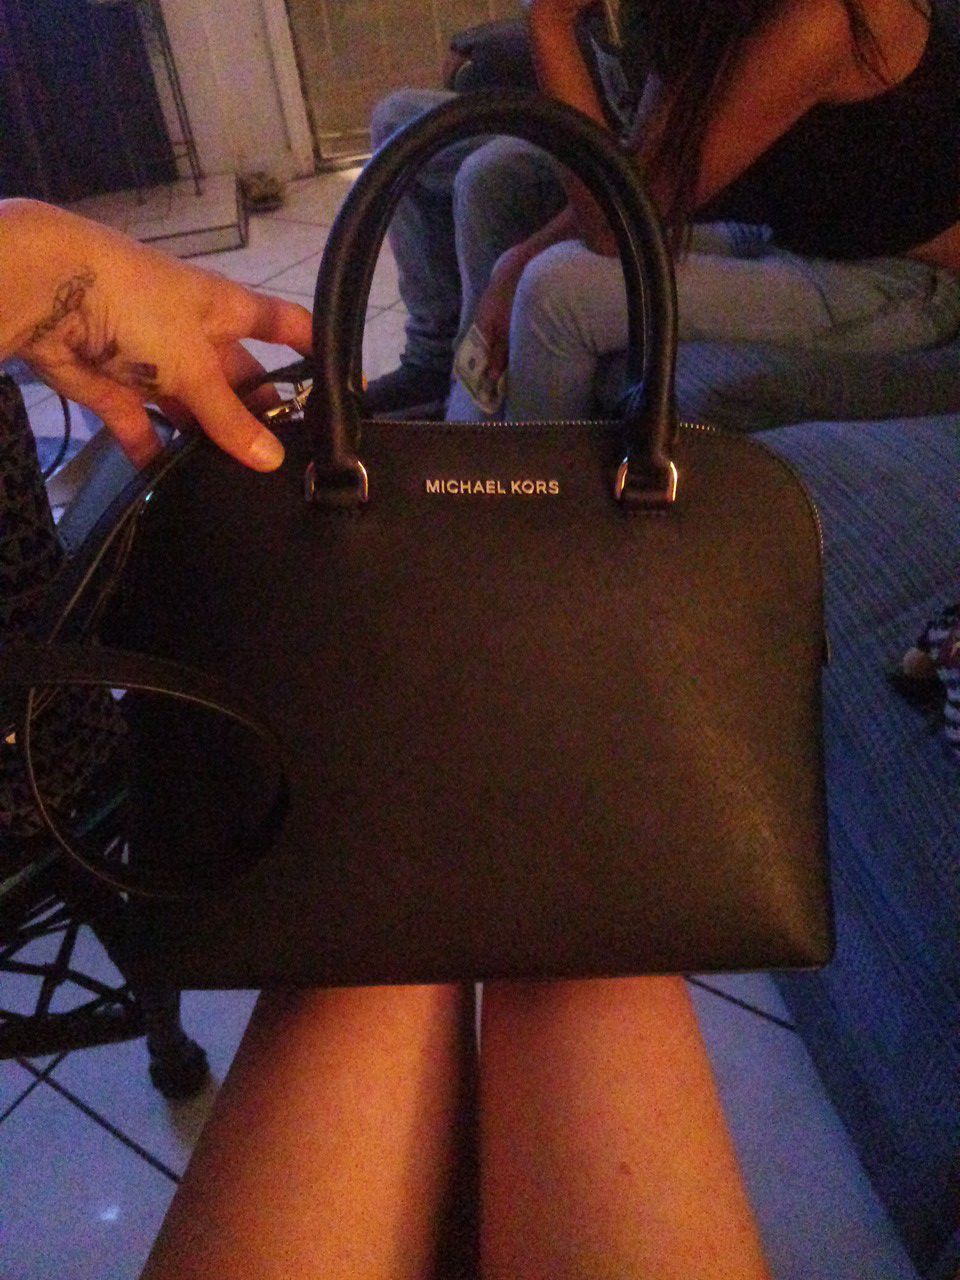 Michael kors brandnew black purse